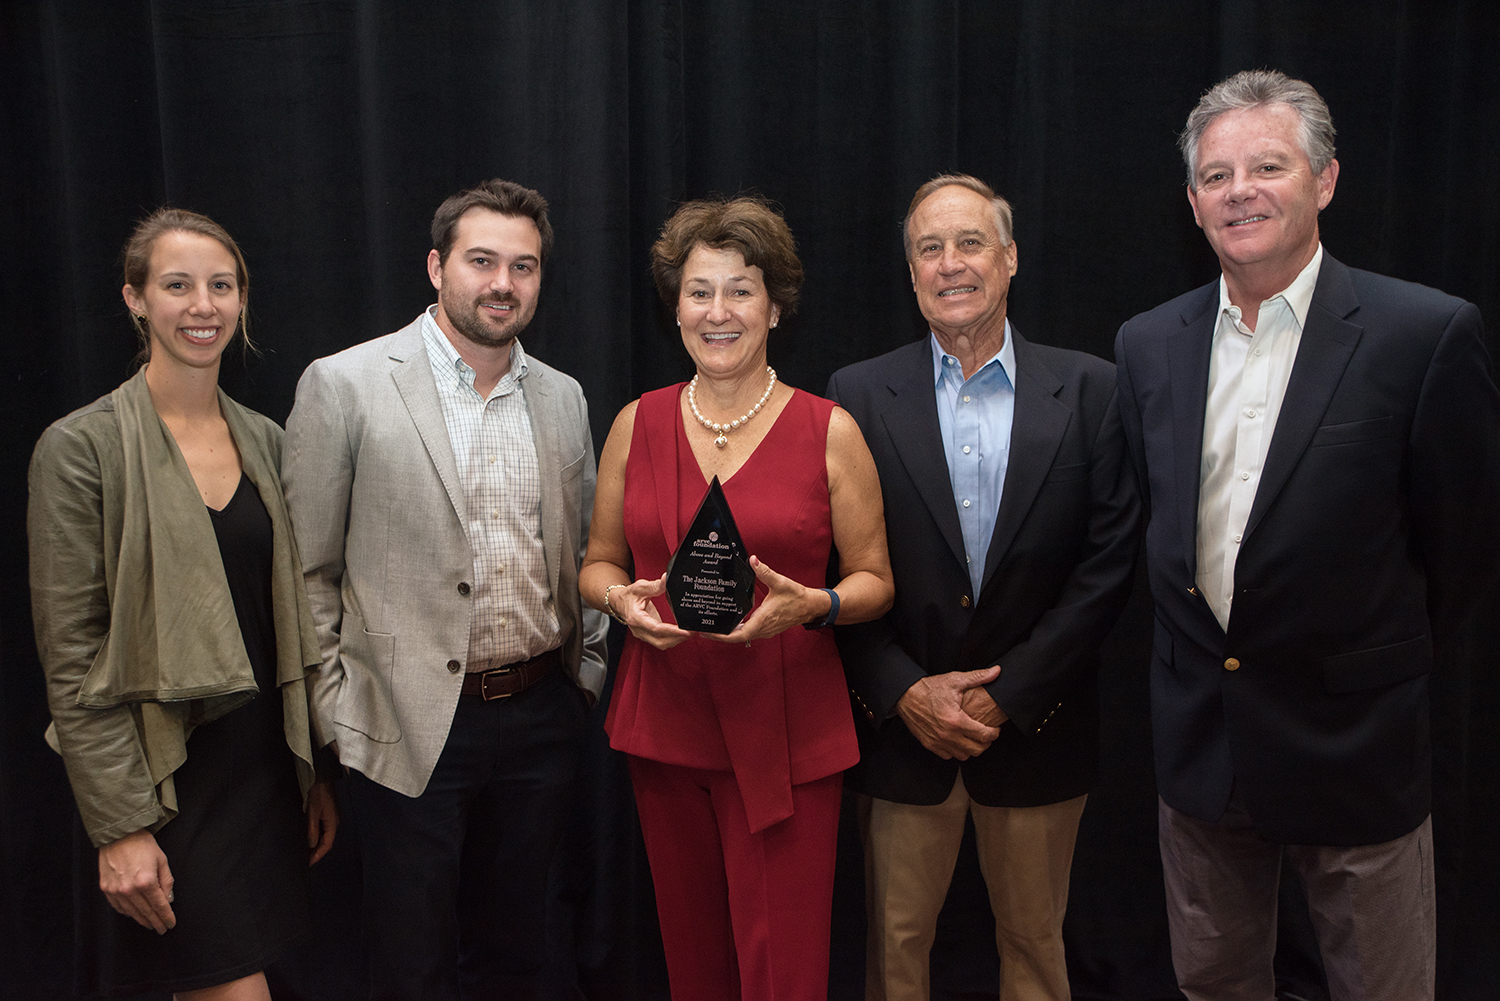 Jackson Family receives ARVC Foundation's highest award